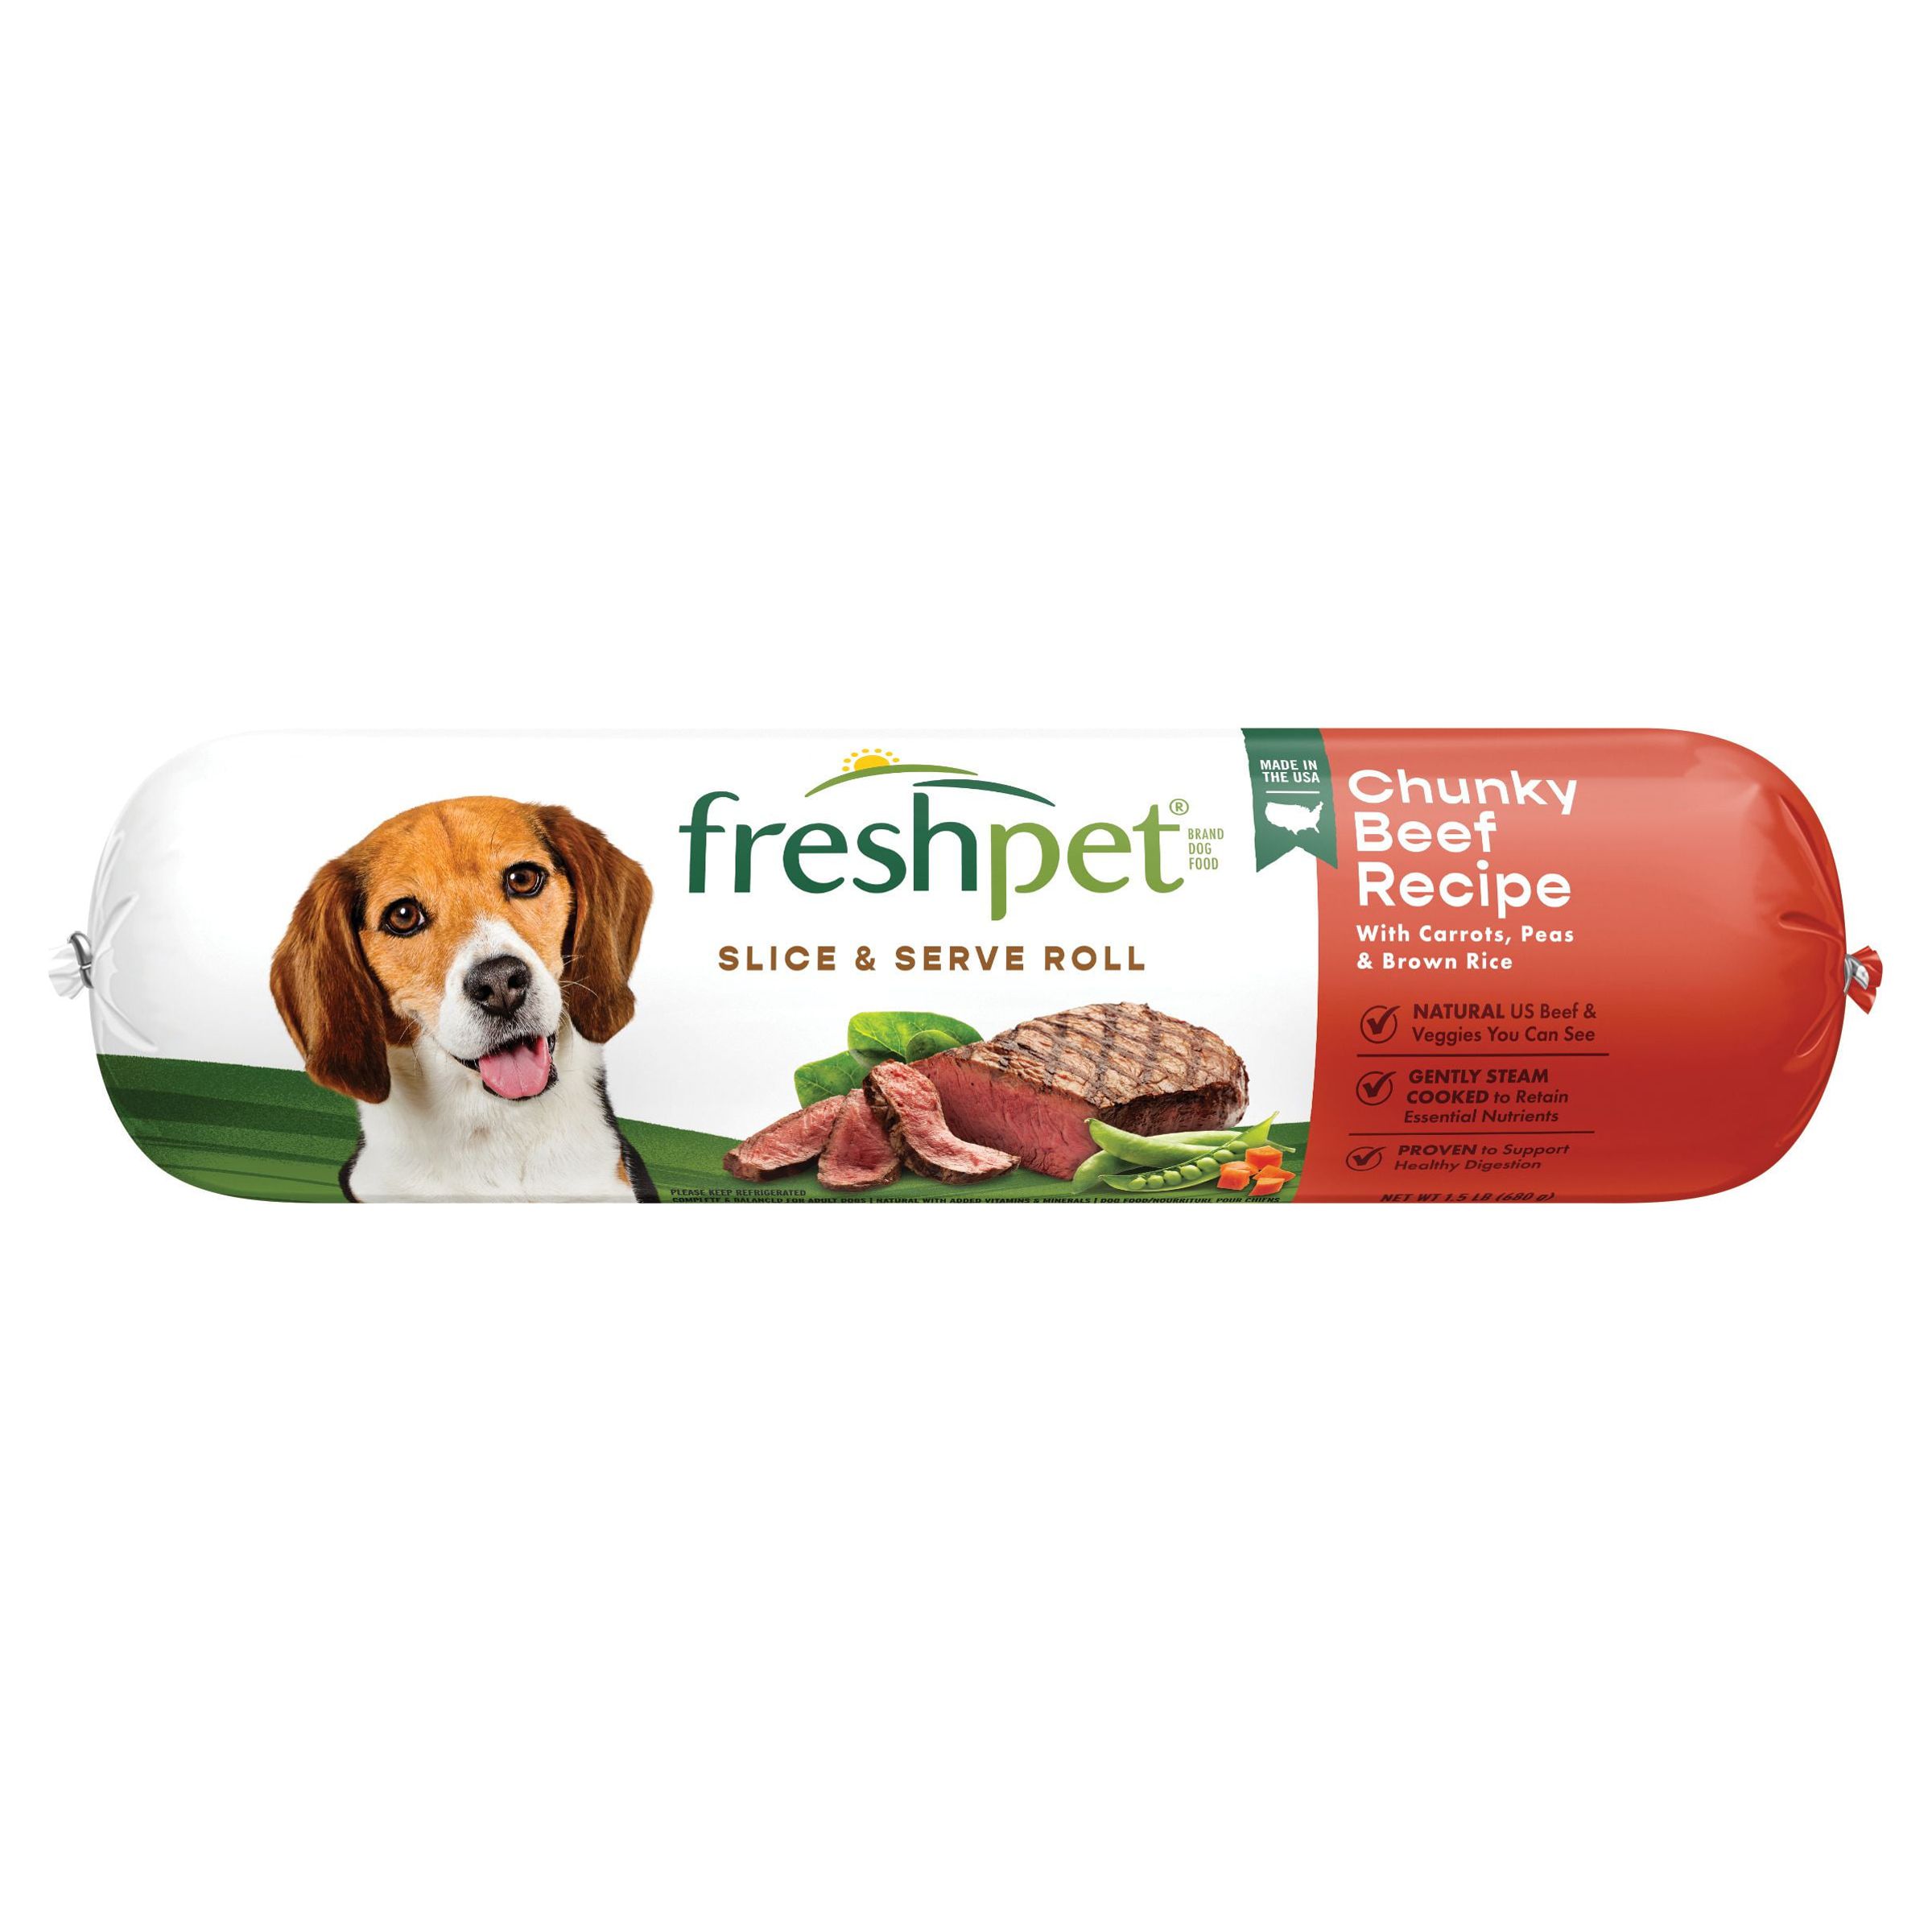 Freshpet Healthy & Natural Dog Food, Fresh Beef Roll, 1.5lb - image 1 of 8